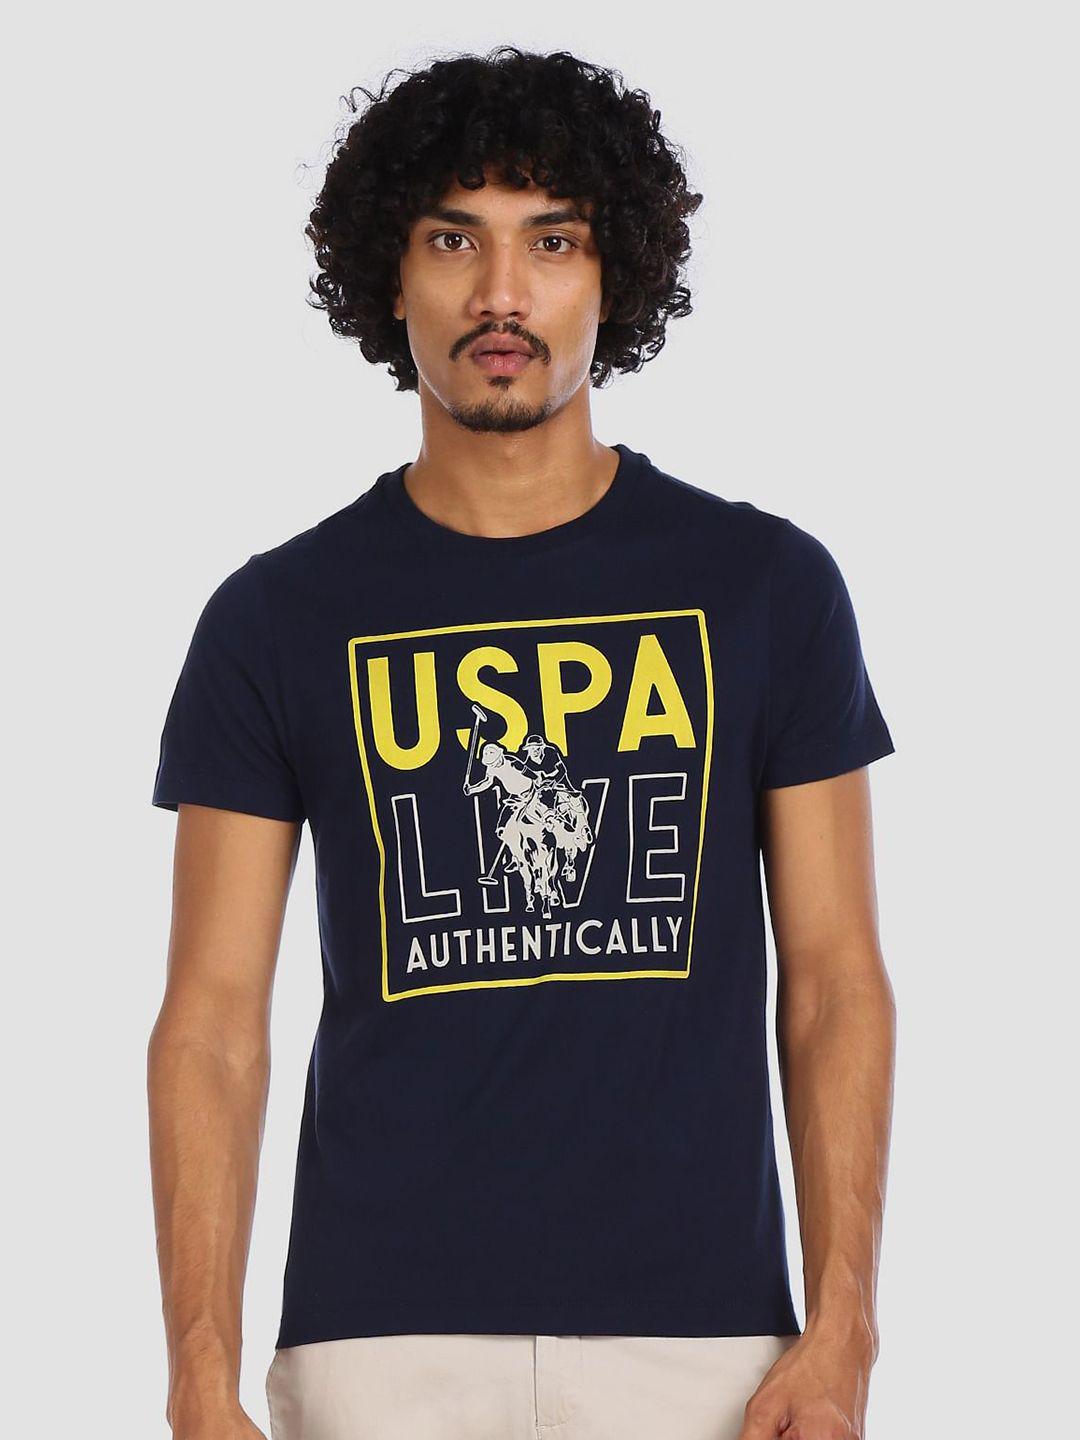 u.s. polo assn. denim co. men navy blue slim fit brand logo printed round neck pure cotton t-shirt